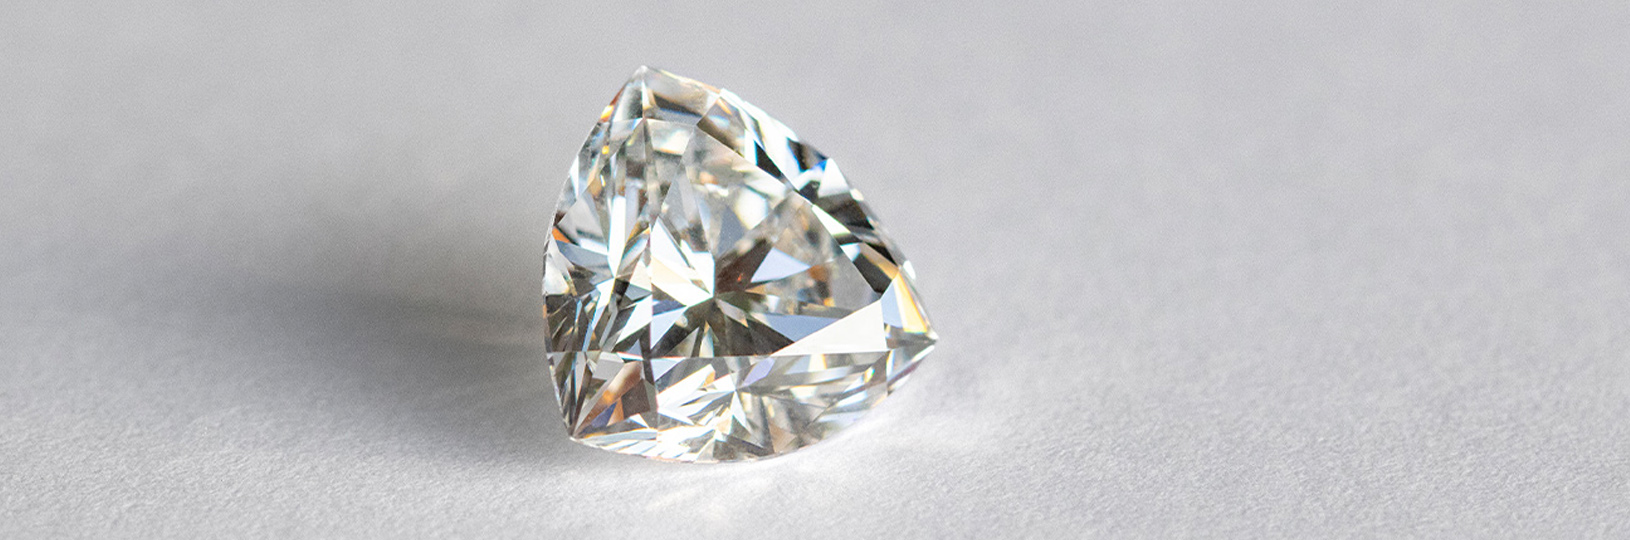 A closeup image of a lab grown diamond